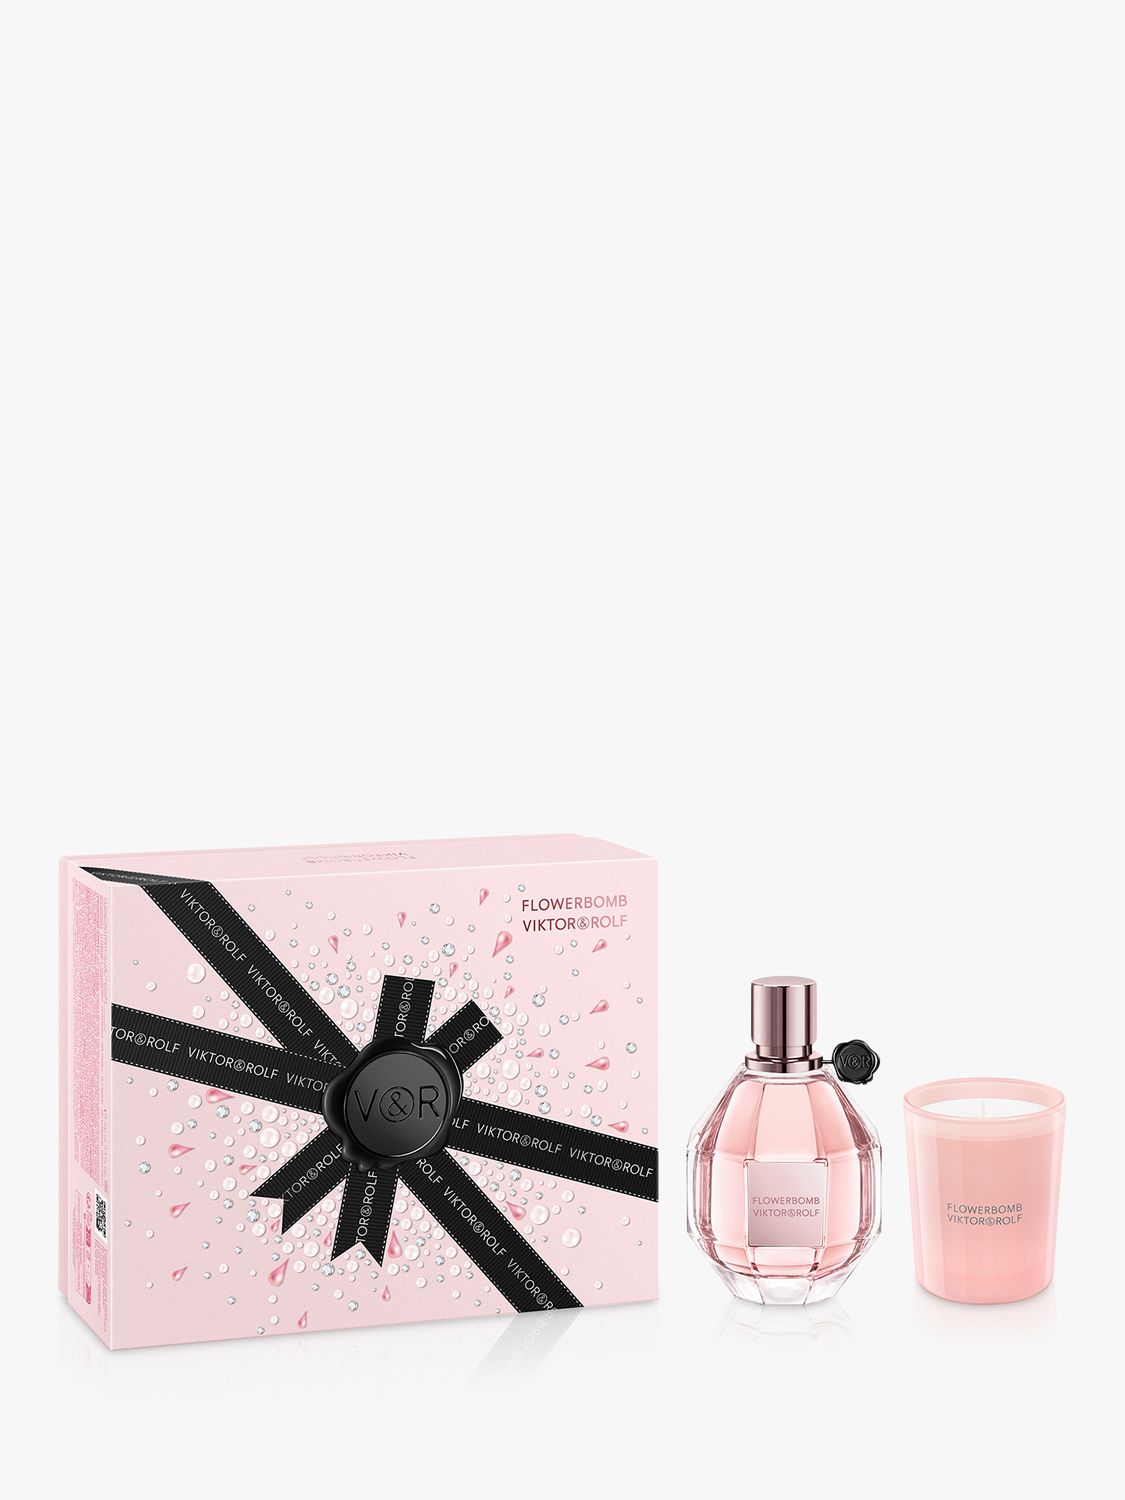 Viktor & Rolf Flowerbomb Eau de Parfum 100ml and Candle Fragrance Gift Set